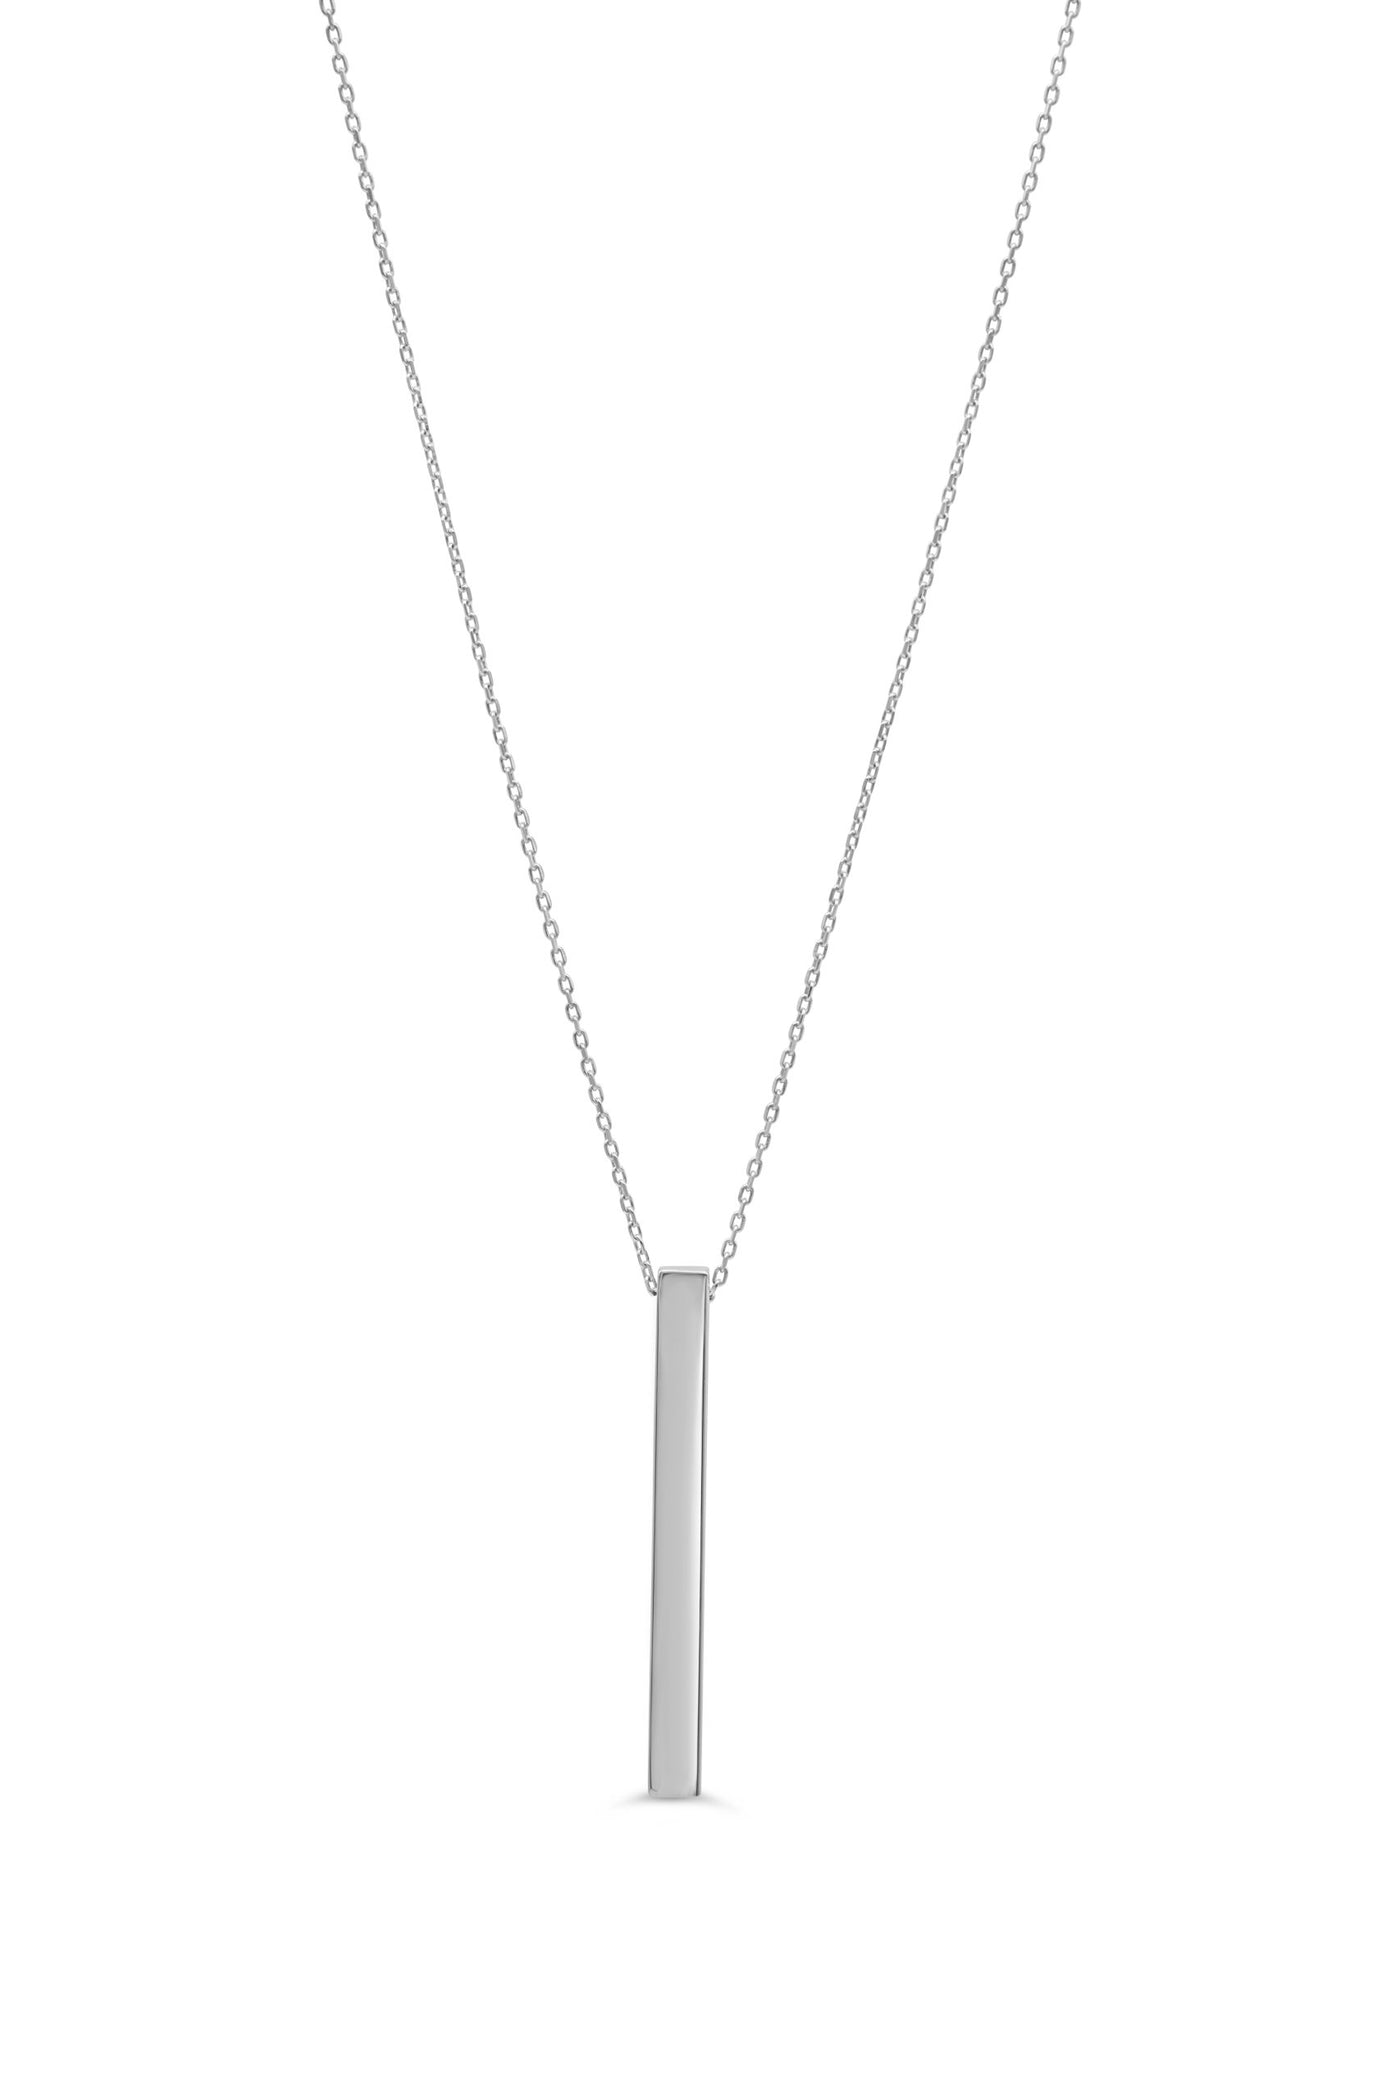 10 Karat White Gold 3D Vertical Bar Necklace